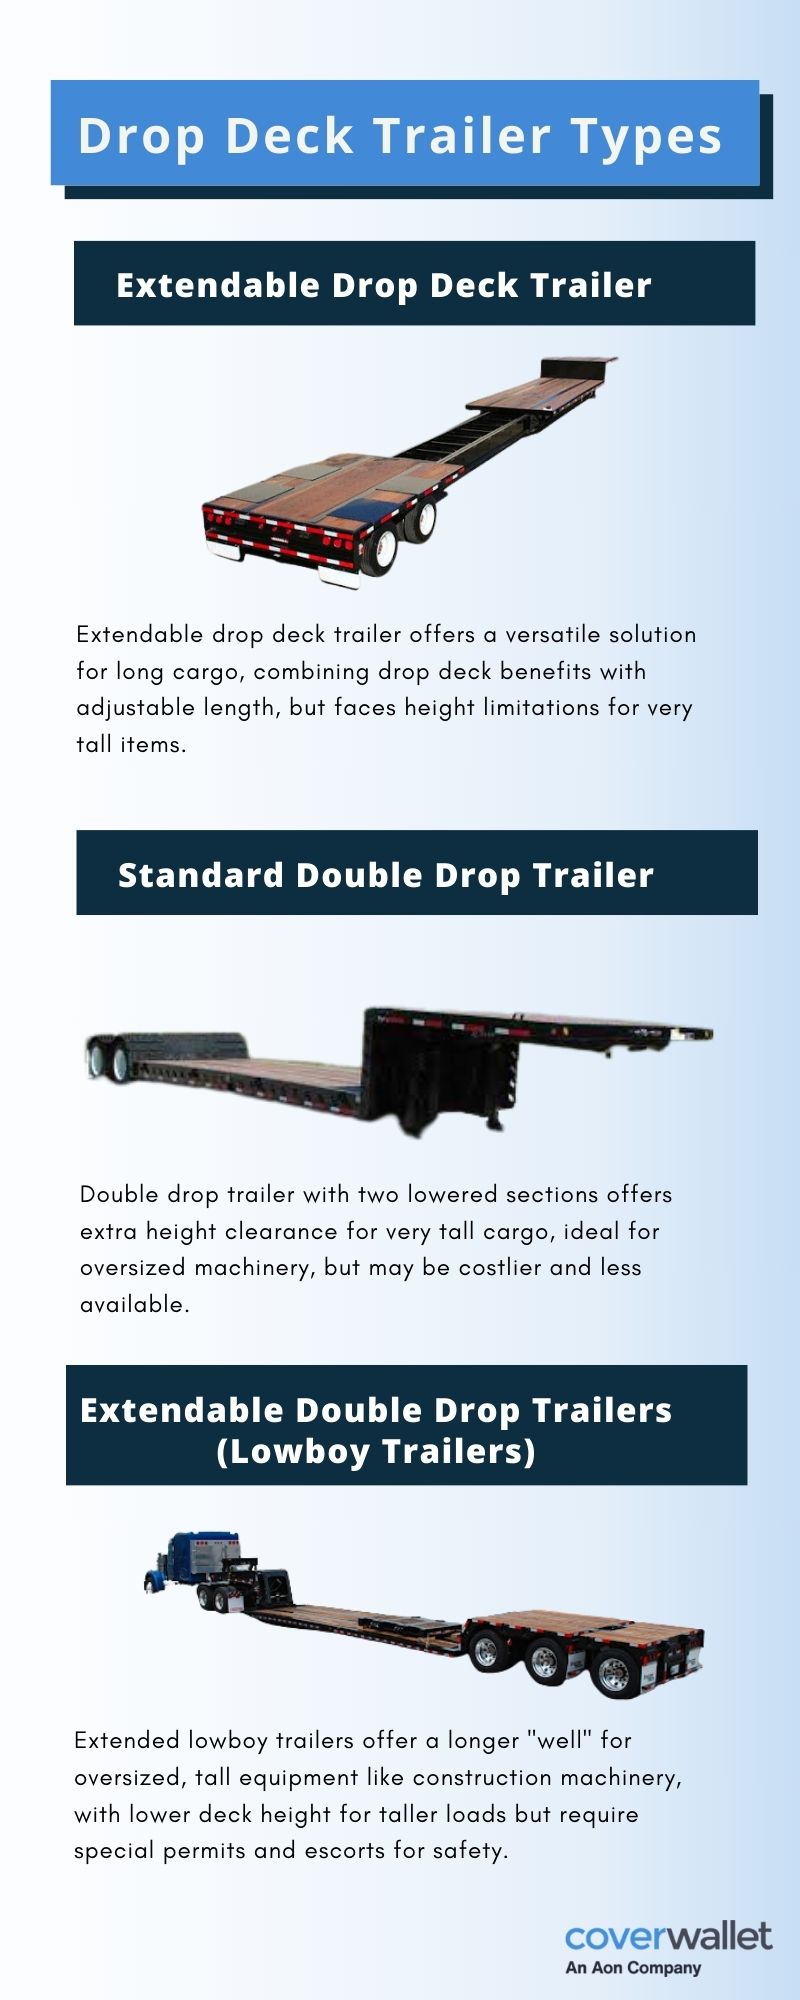 [INFOGRAPHIC] Drop deck trailer types